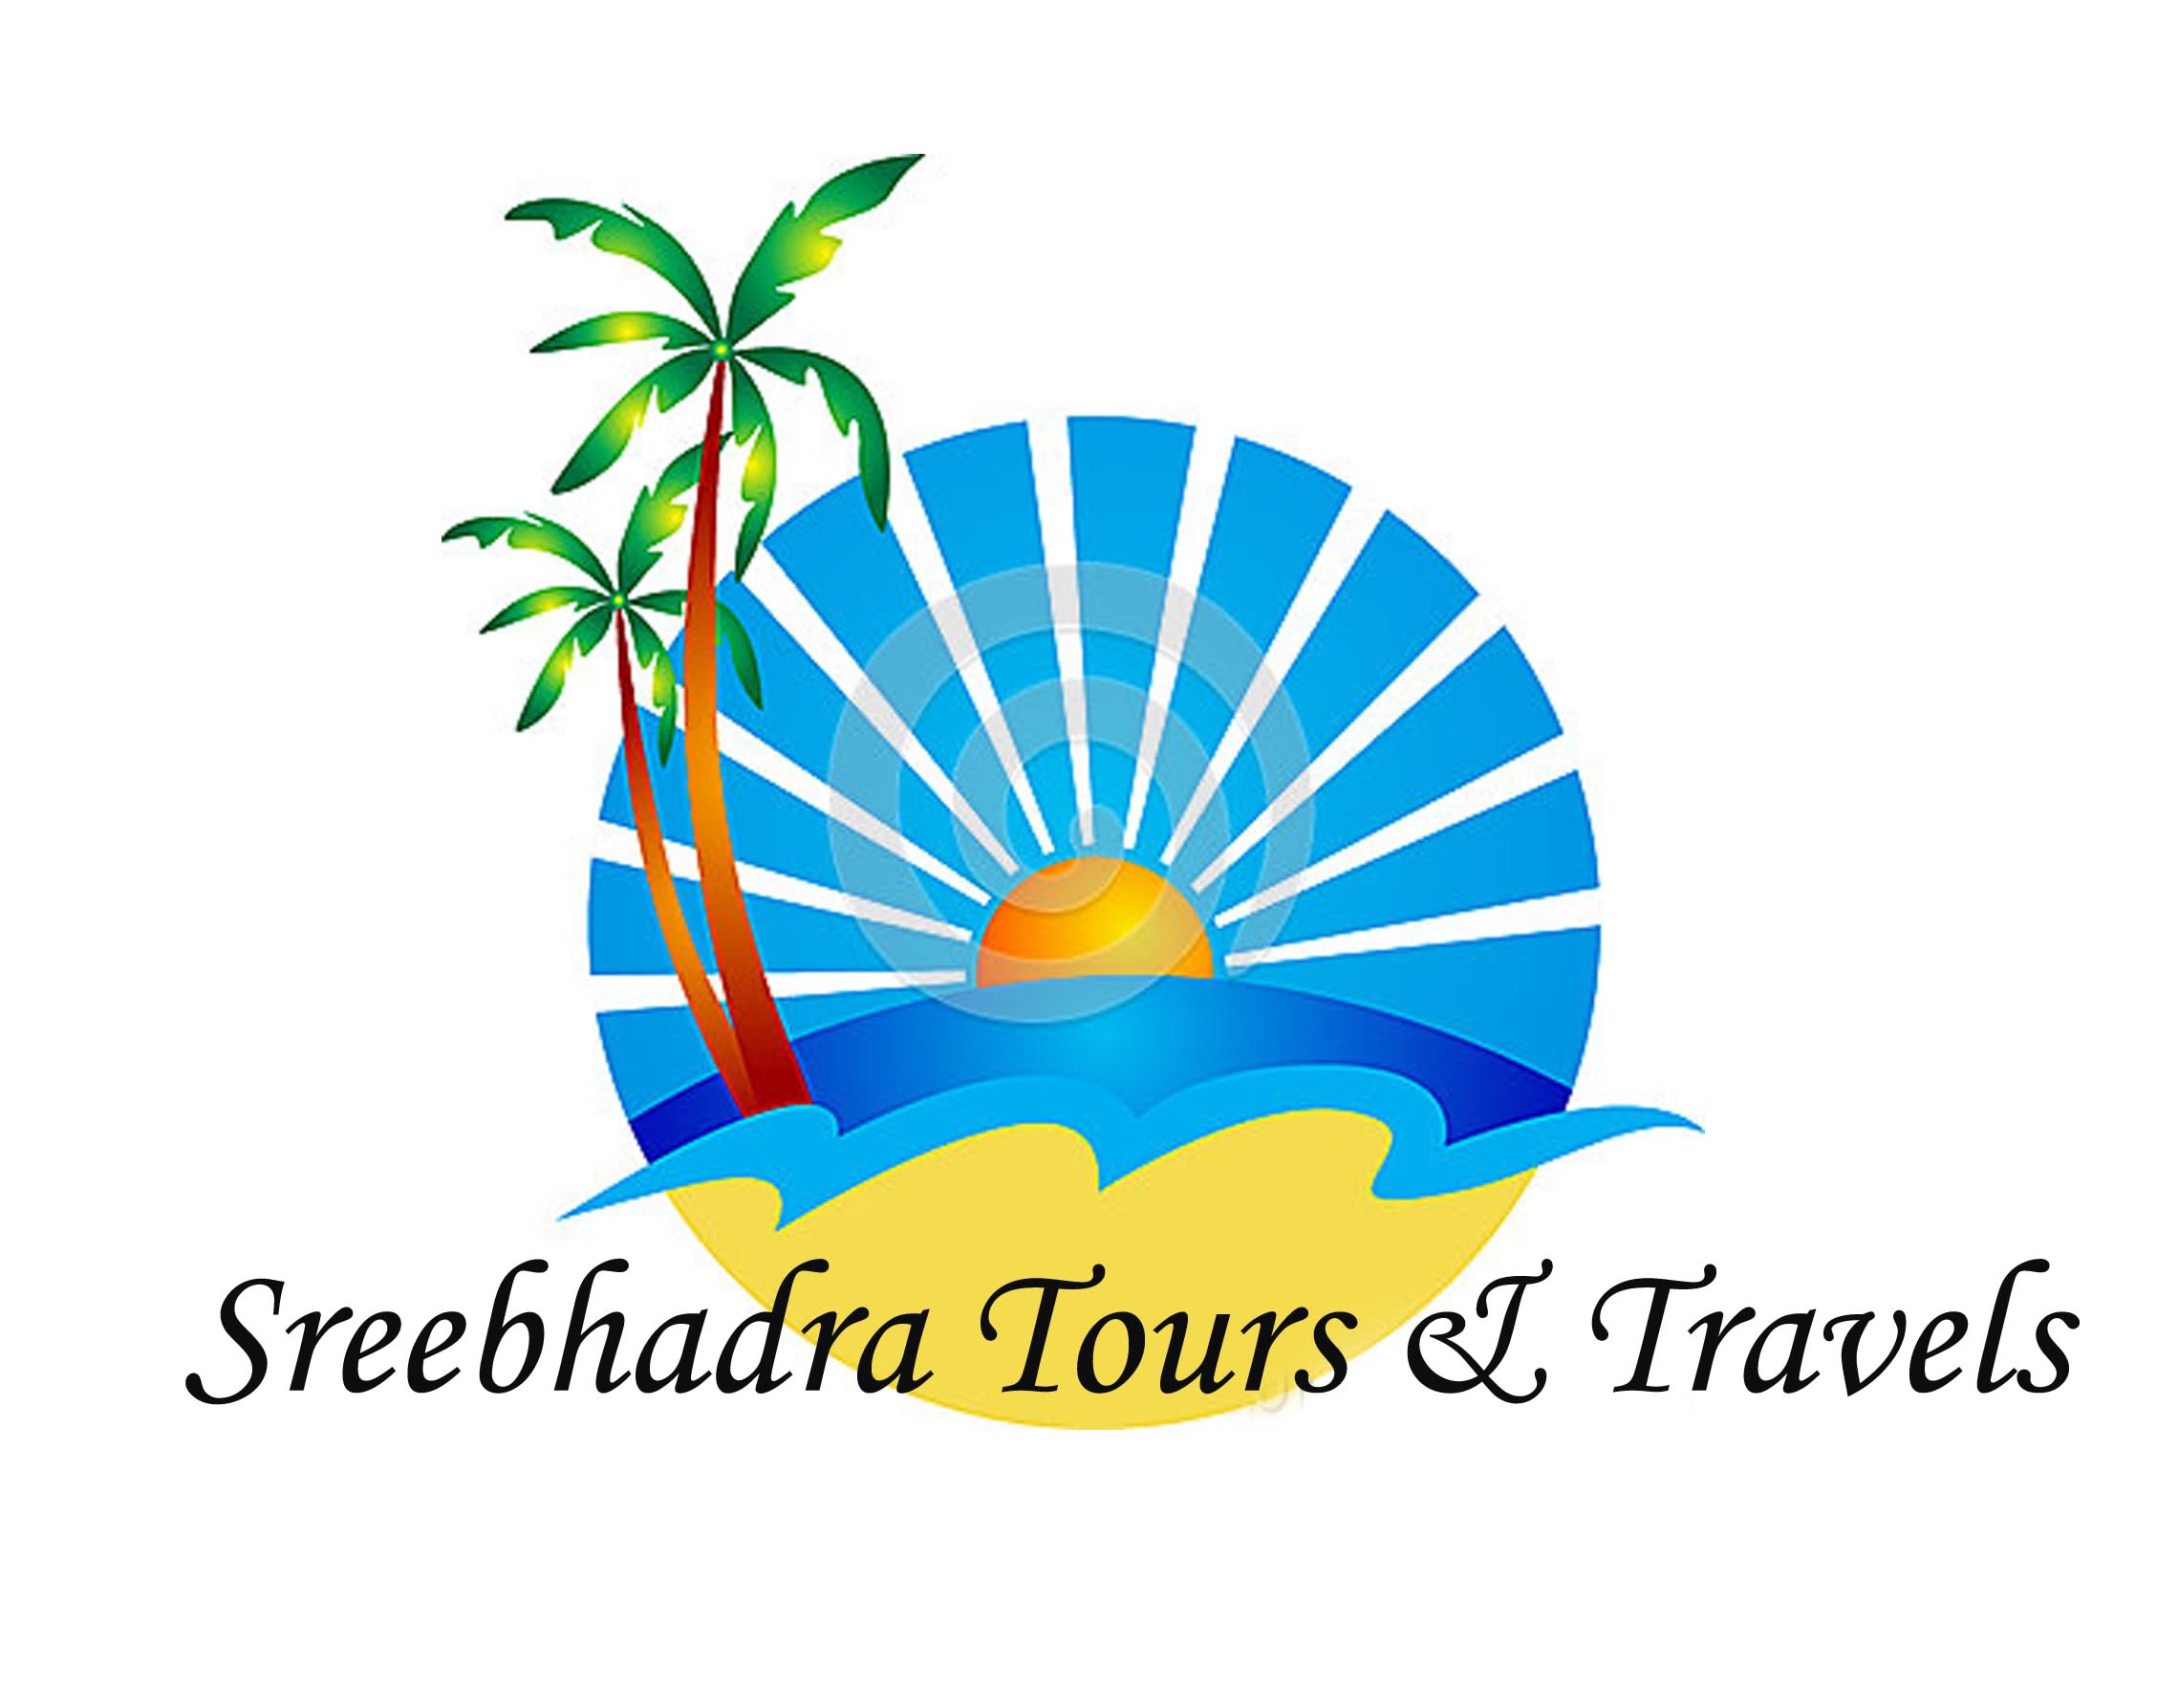 Kochi Tours & Travels